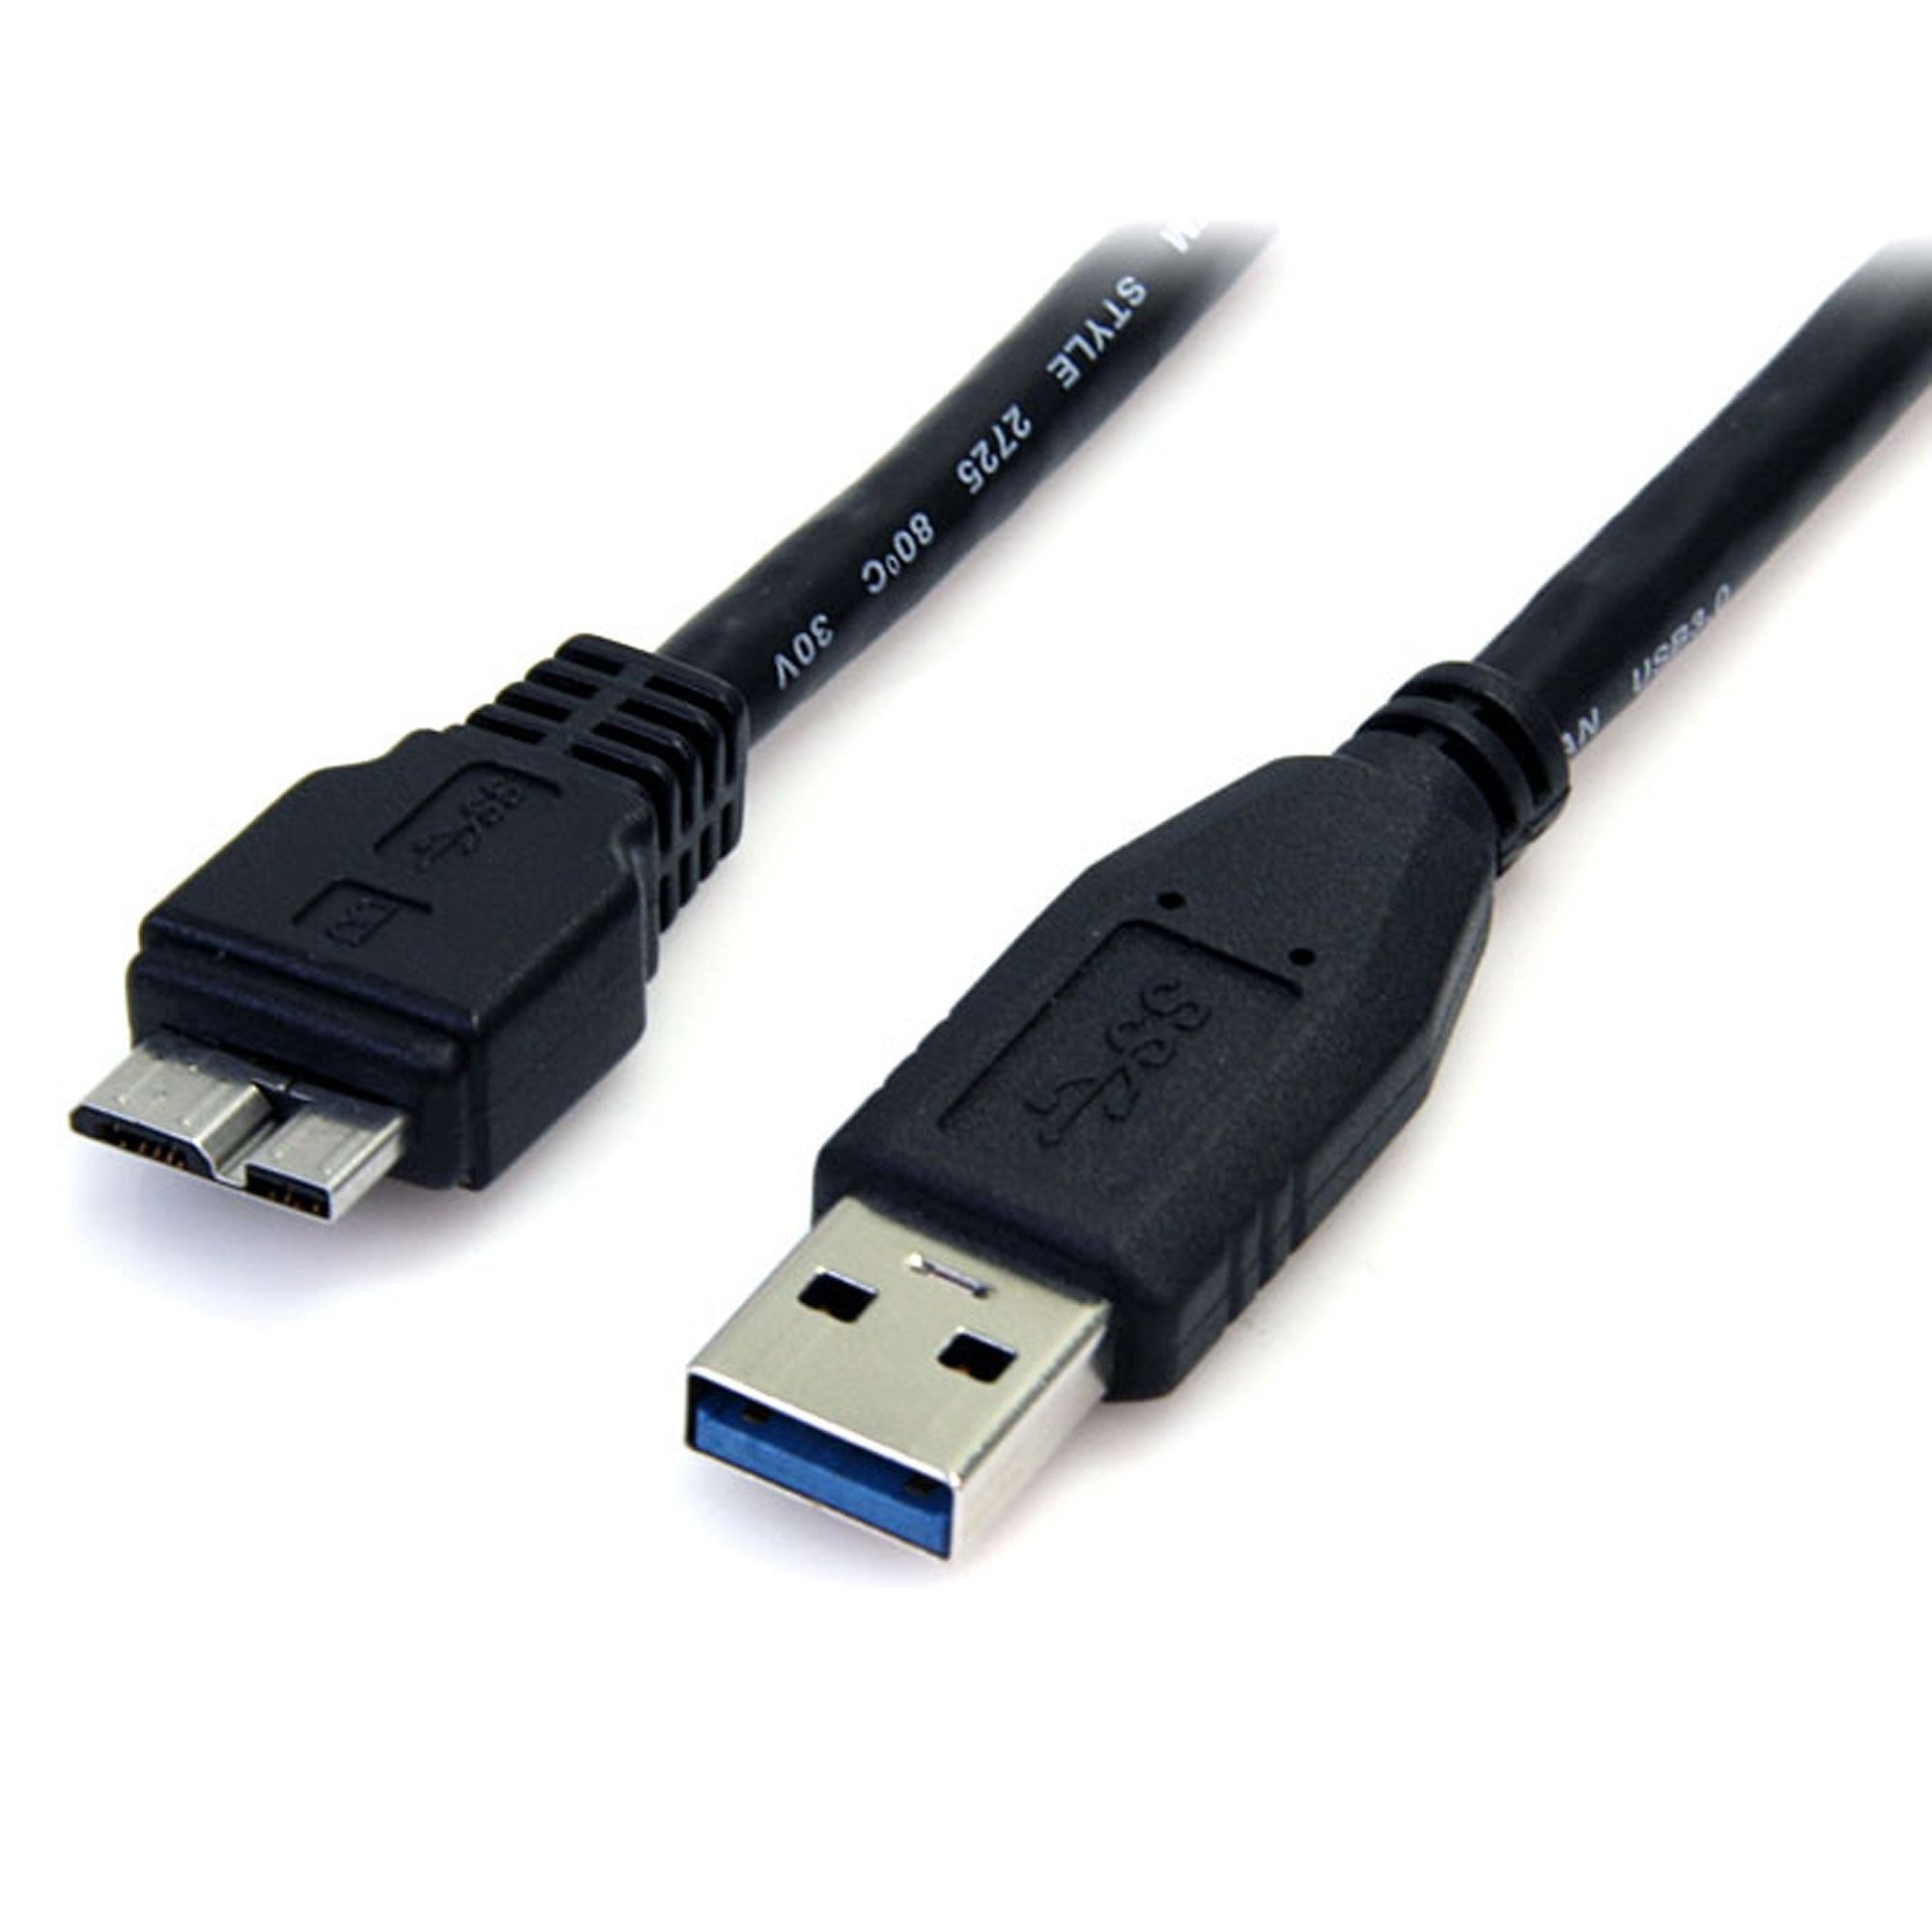 StarTech USB 3.0 Micro B Cable (0.5m, Black)